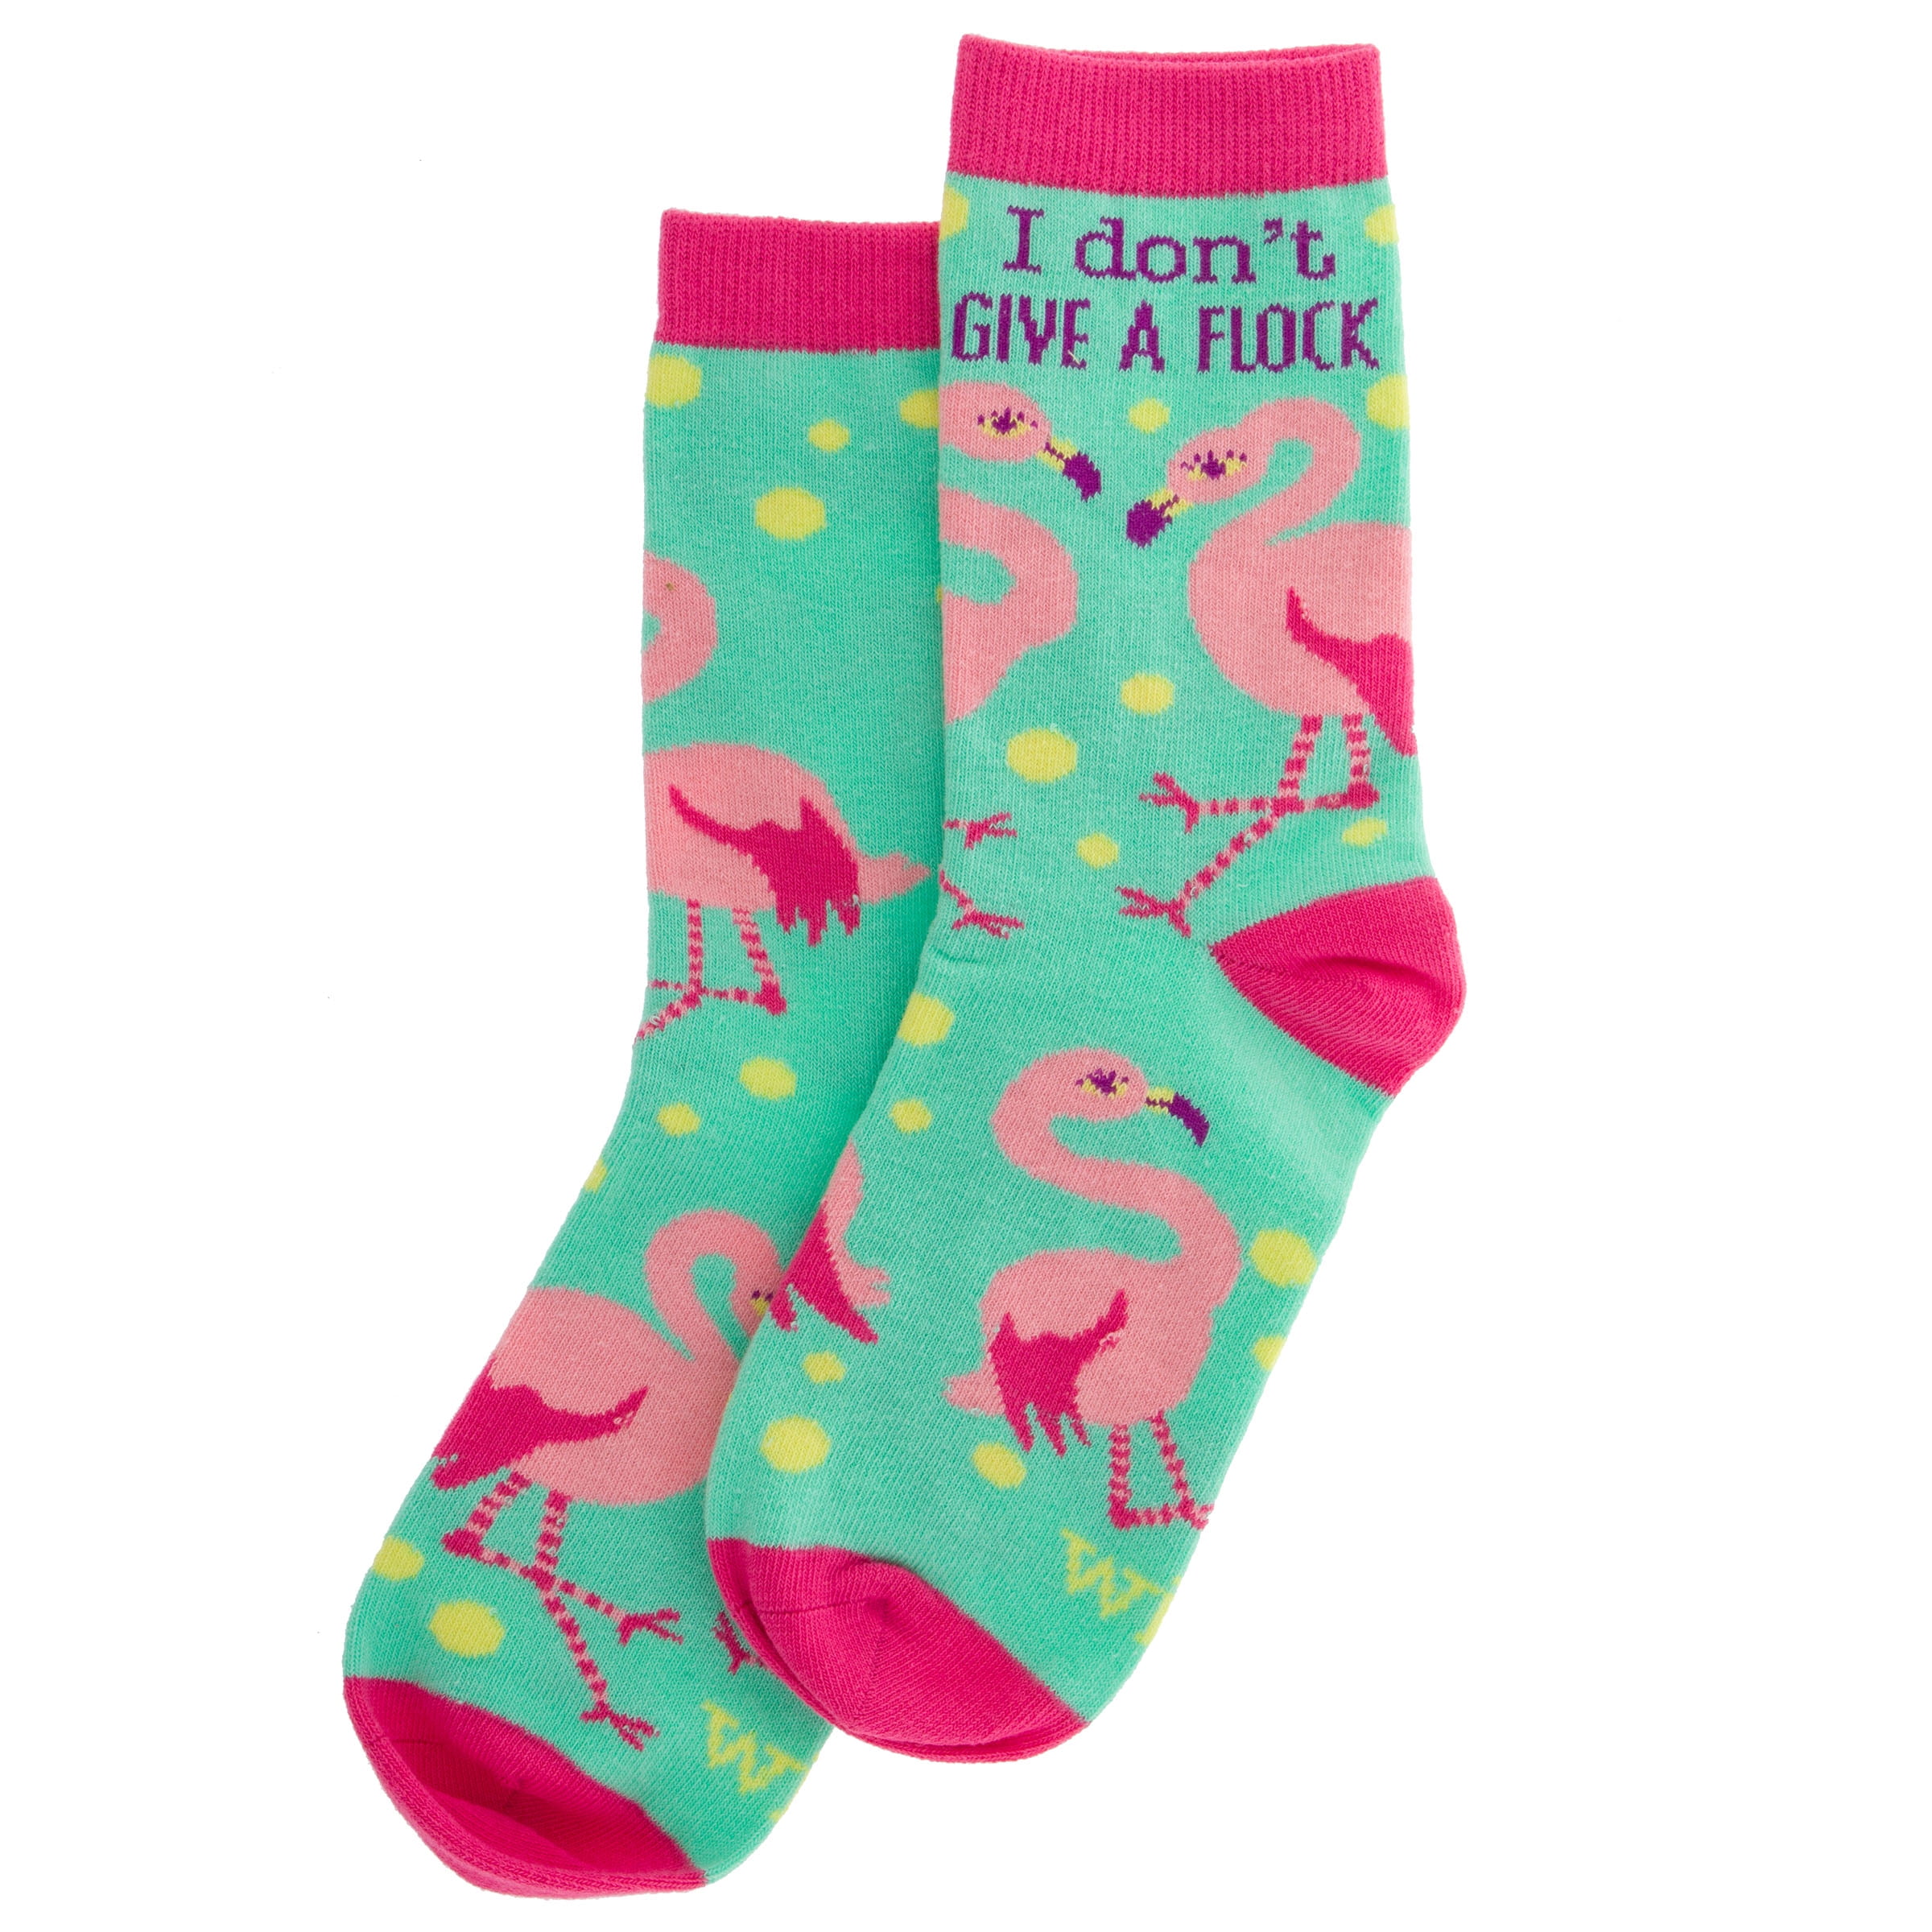 Flamingoes Unisex Funny Casual Crew Socks Athletic Socks For Boys Girls Kids Teenagers